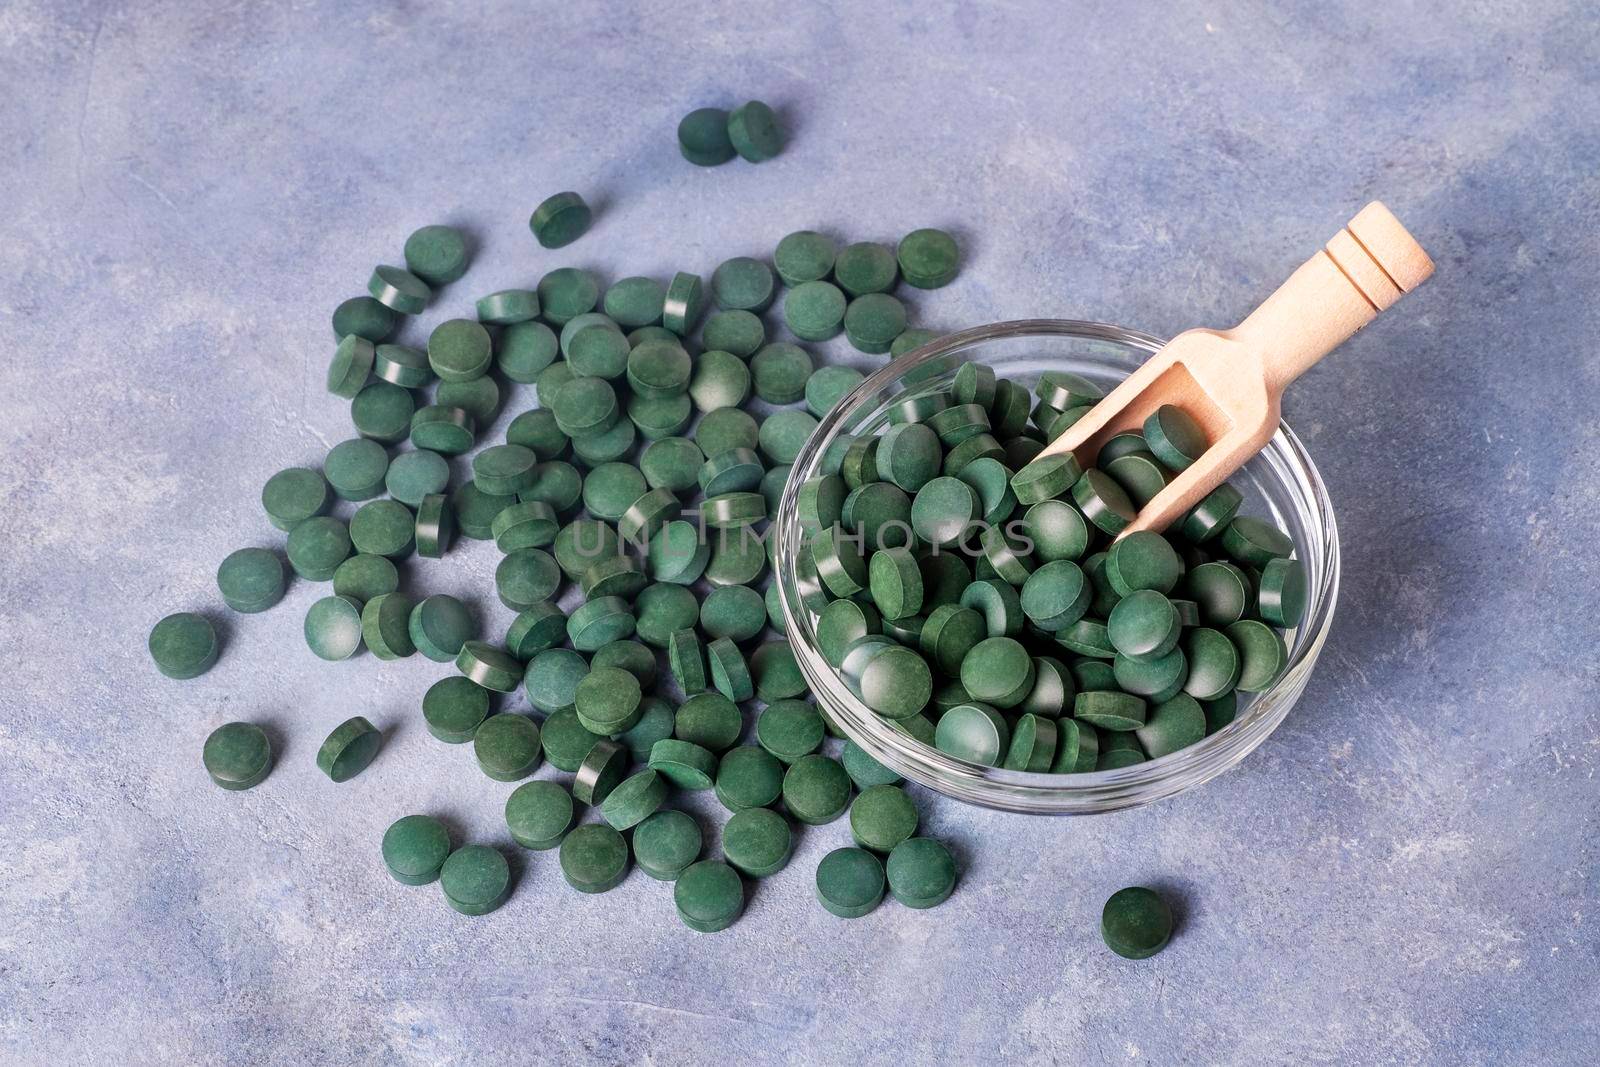 Green pills of spirulina or chlorella by OlgaGubskaya